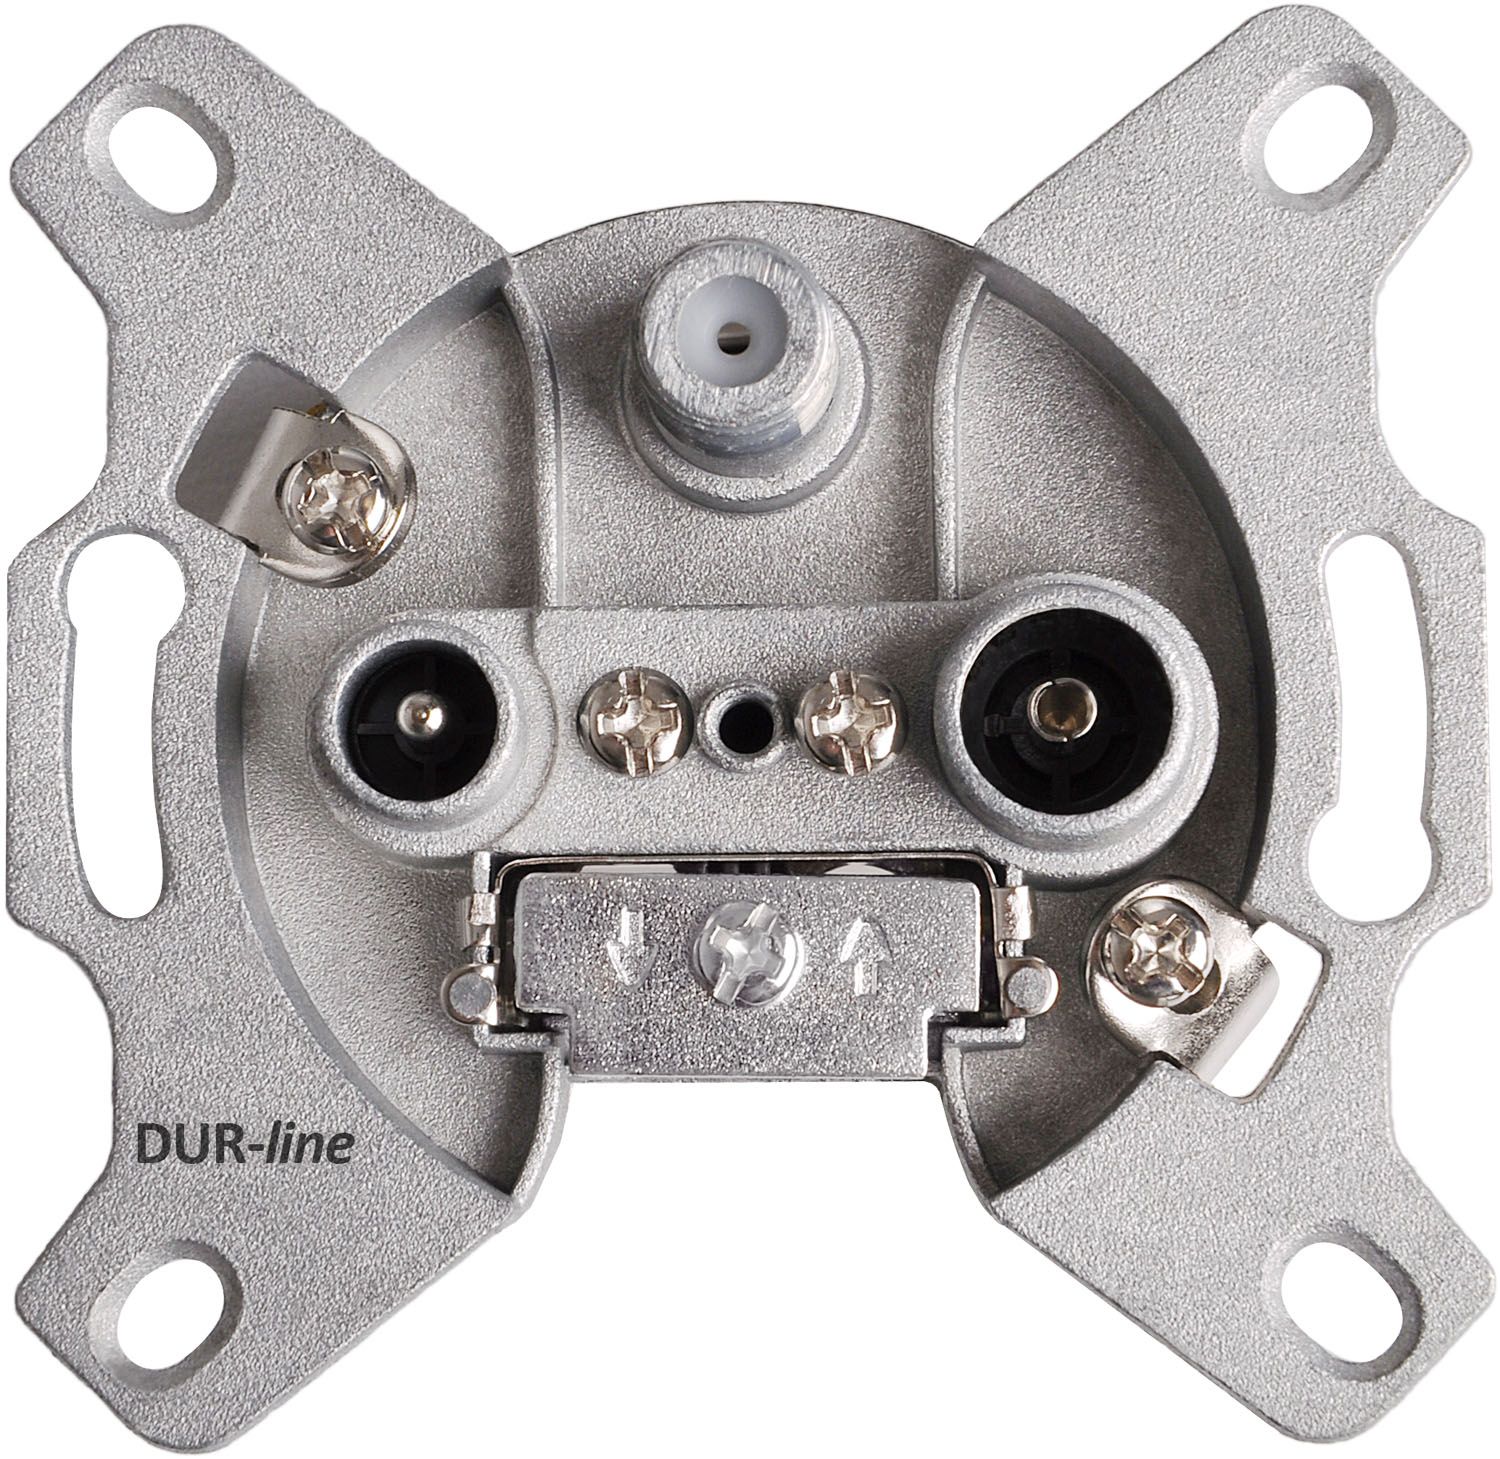 DUR-line DSA 63001 - Sat-Durchgangsdose